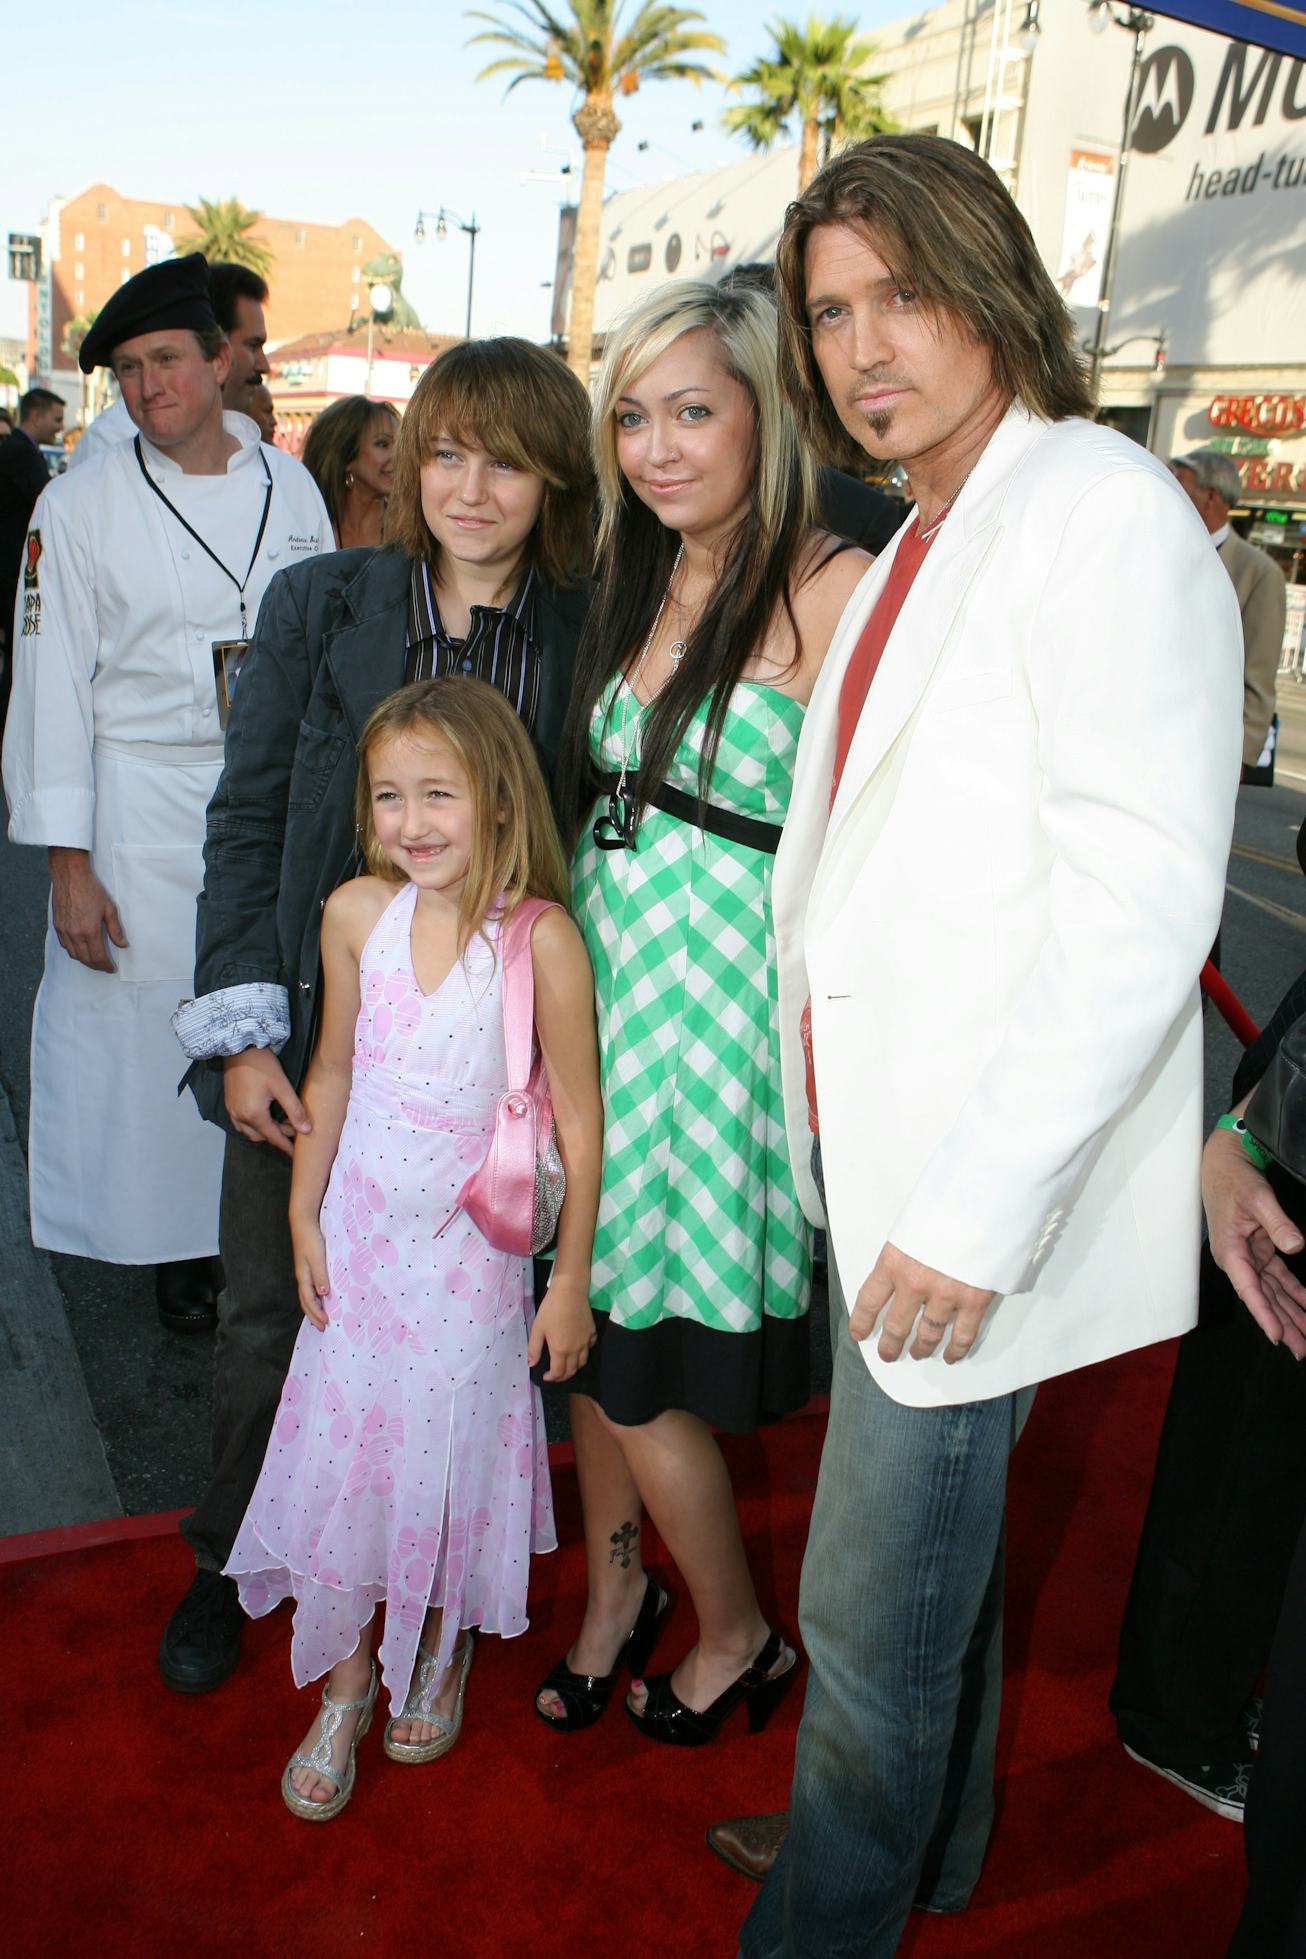 Noah Cyrus, in a long pastel pink dress next to Billie-Ray Cyrus, Brandi Cyrus, and Braison Cyrus on...